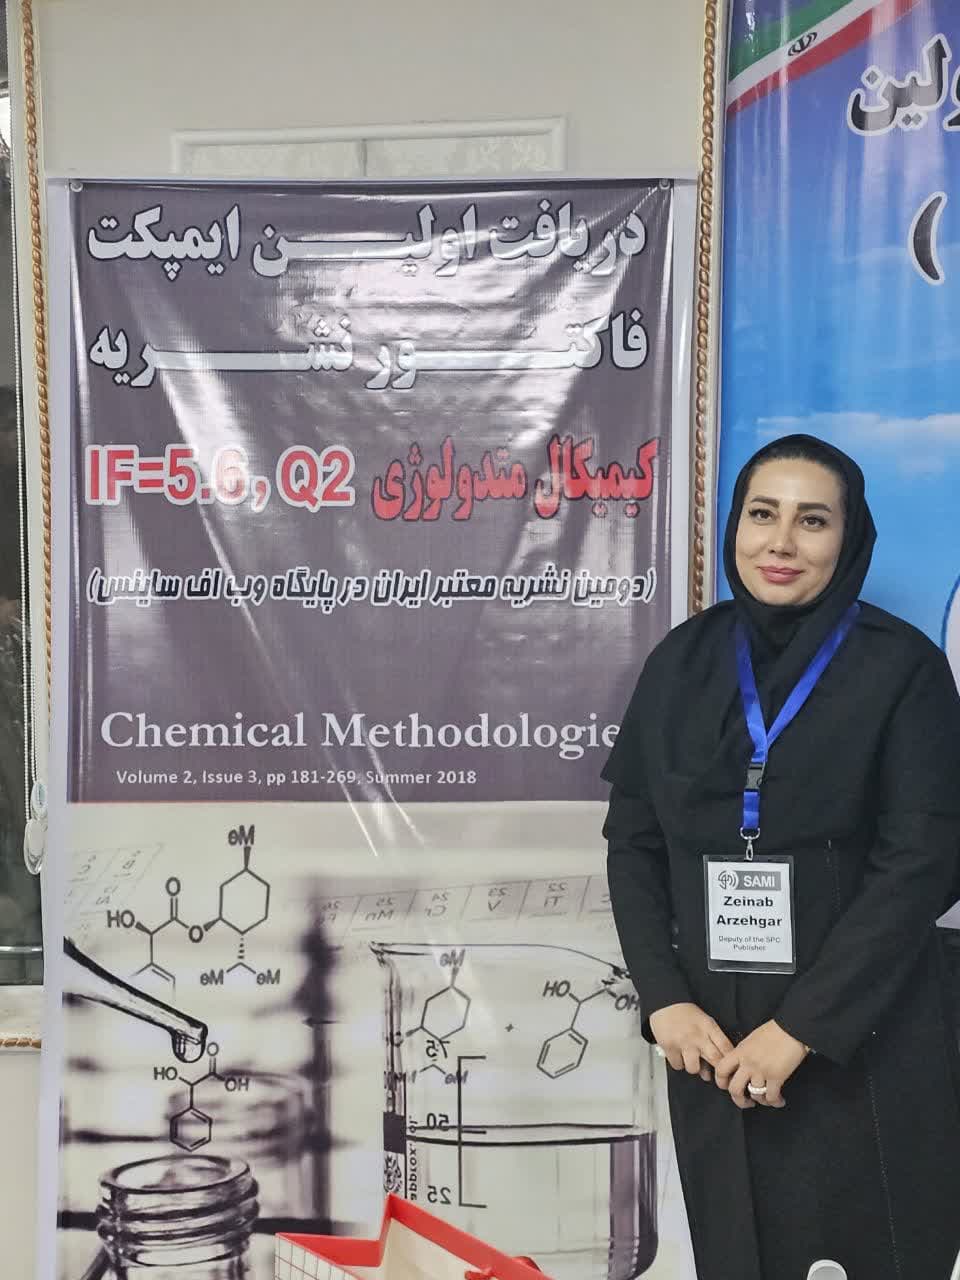 Dr. Zeinab Arzehgar